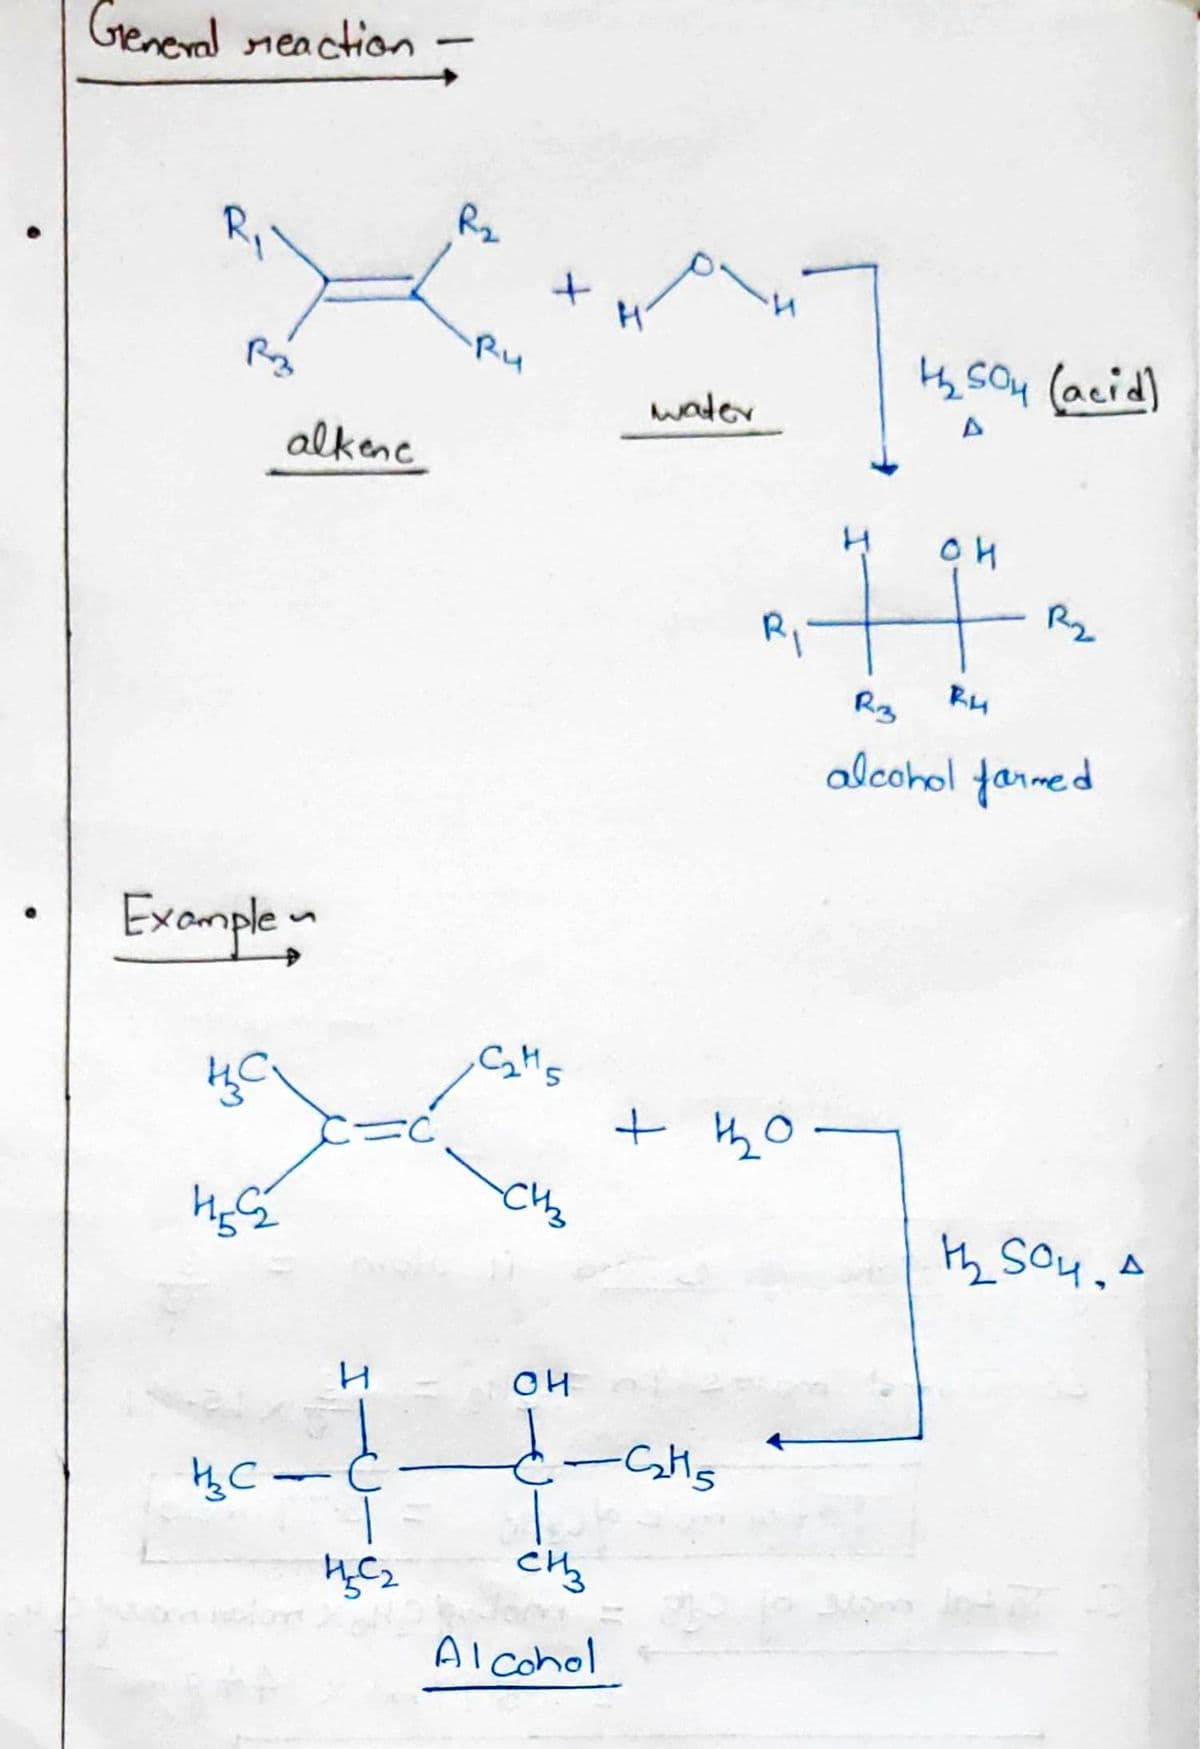 General reaction -
Rz
Ru
Hy SOu (acid)
wader
alkenc
R2
R1
Rg
alcohol tarmed
Examplen
OH
Al cohol
